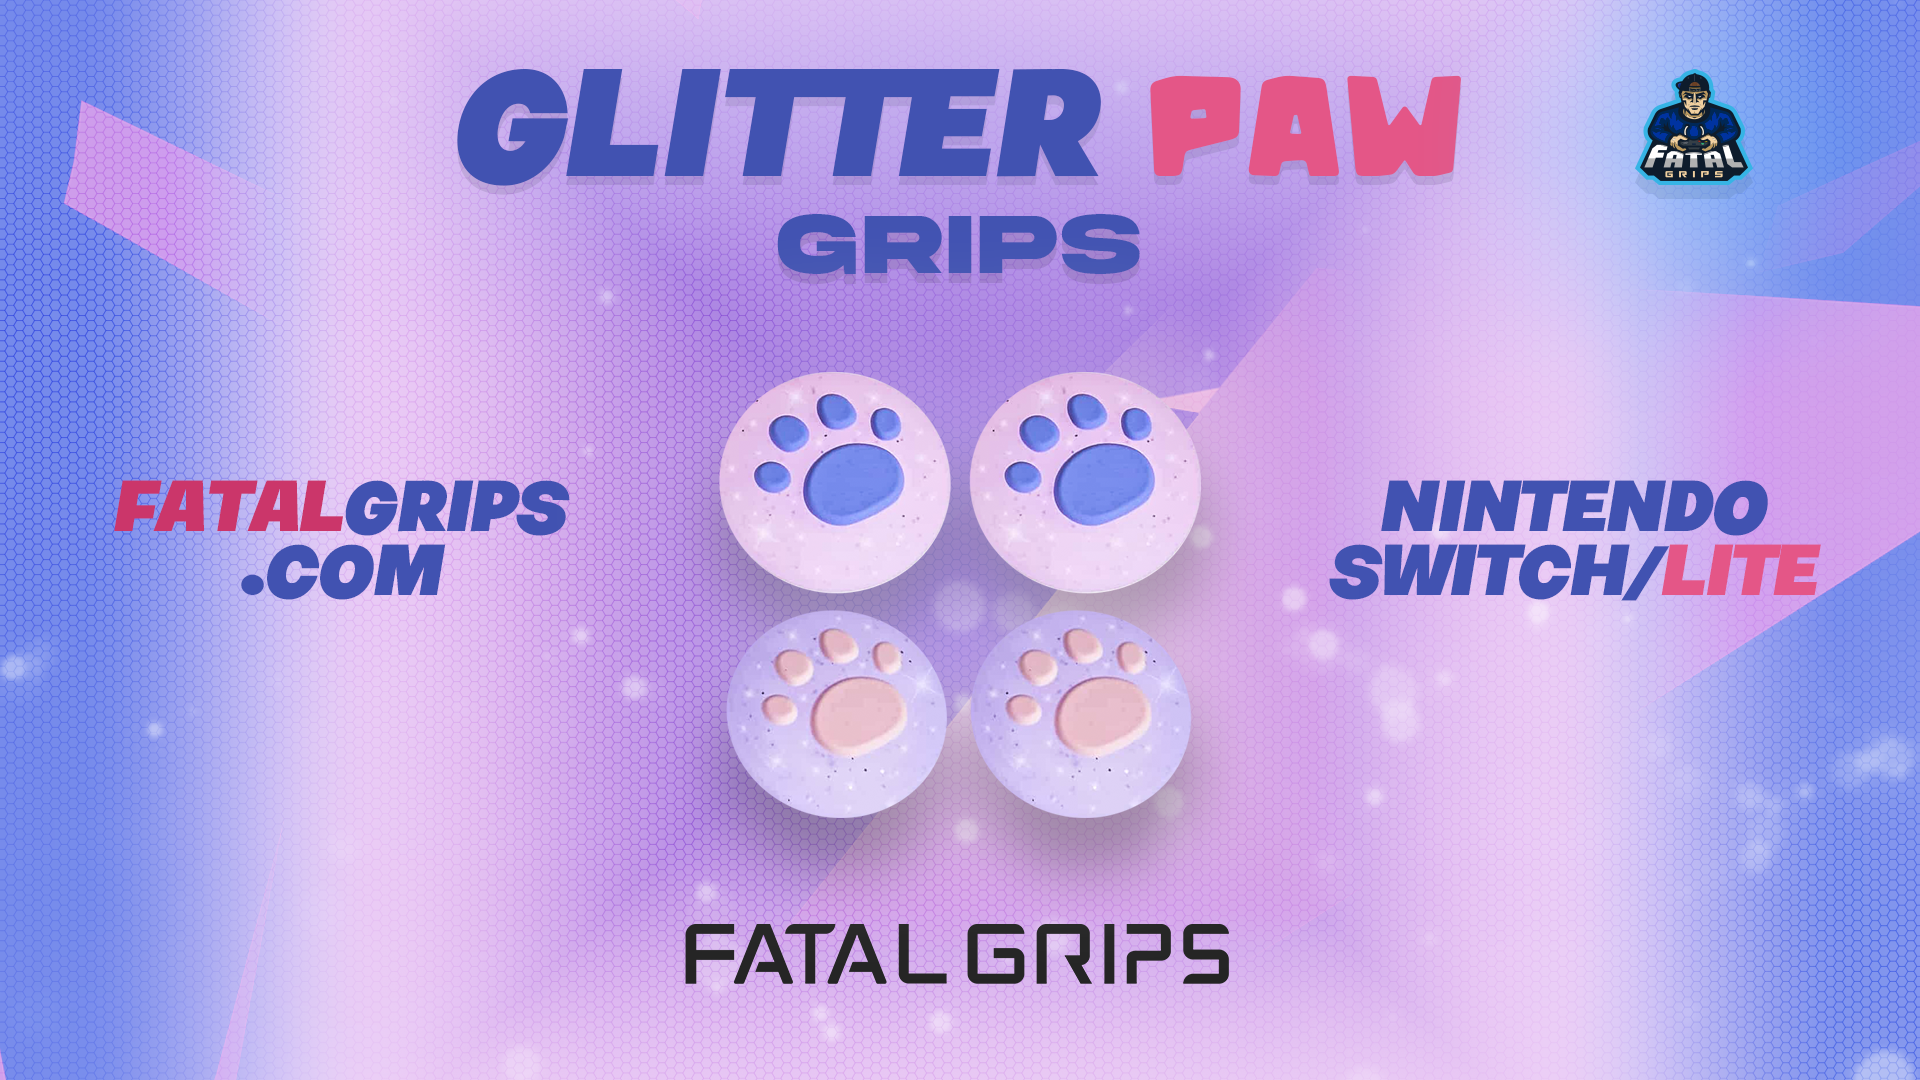 Glitter Paw Grips